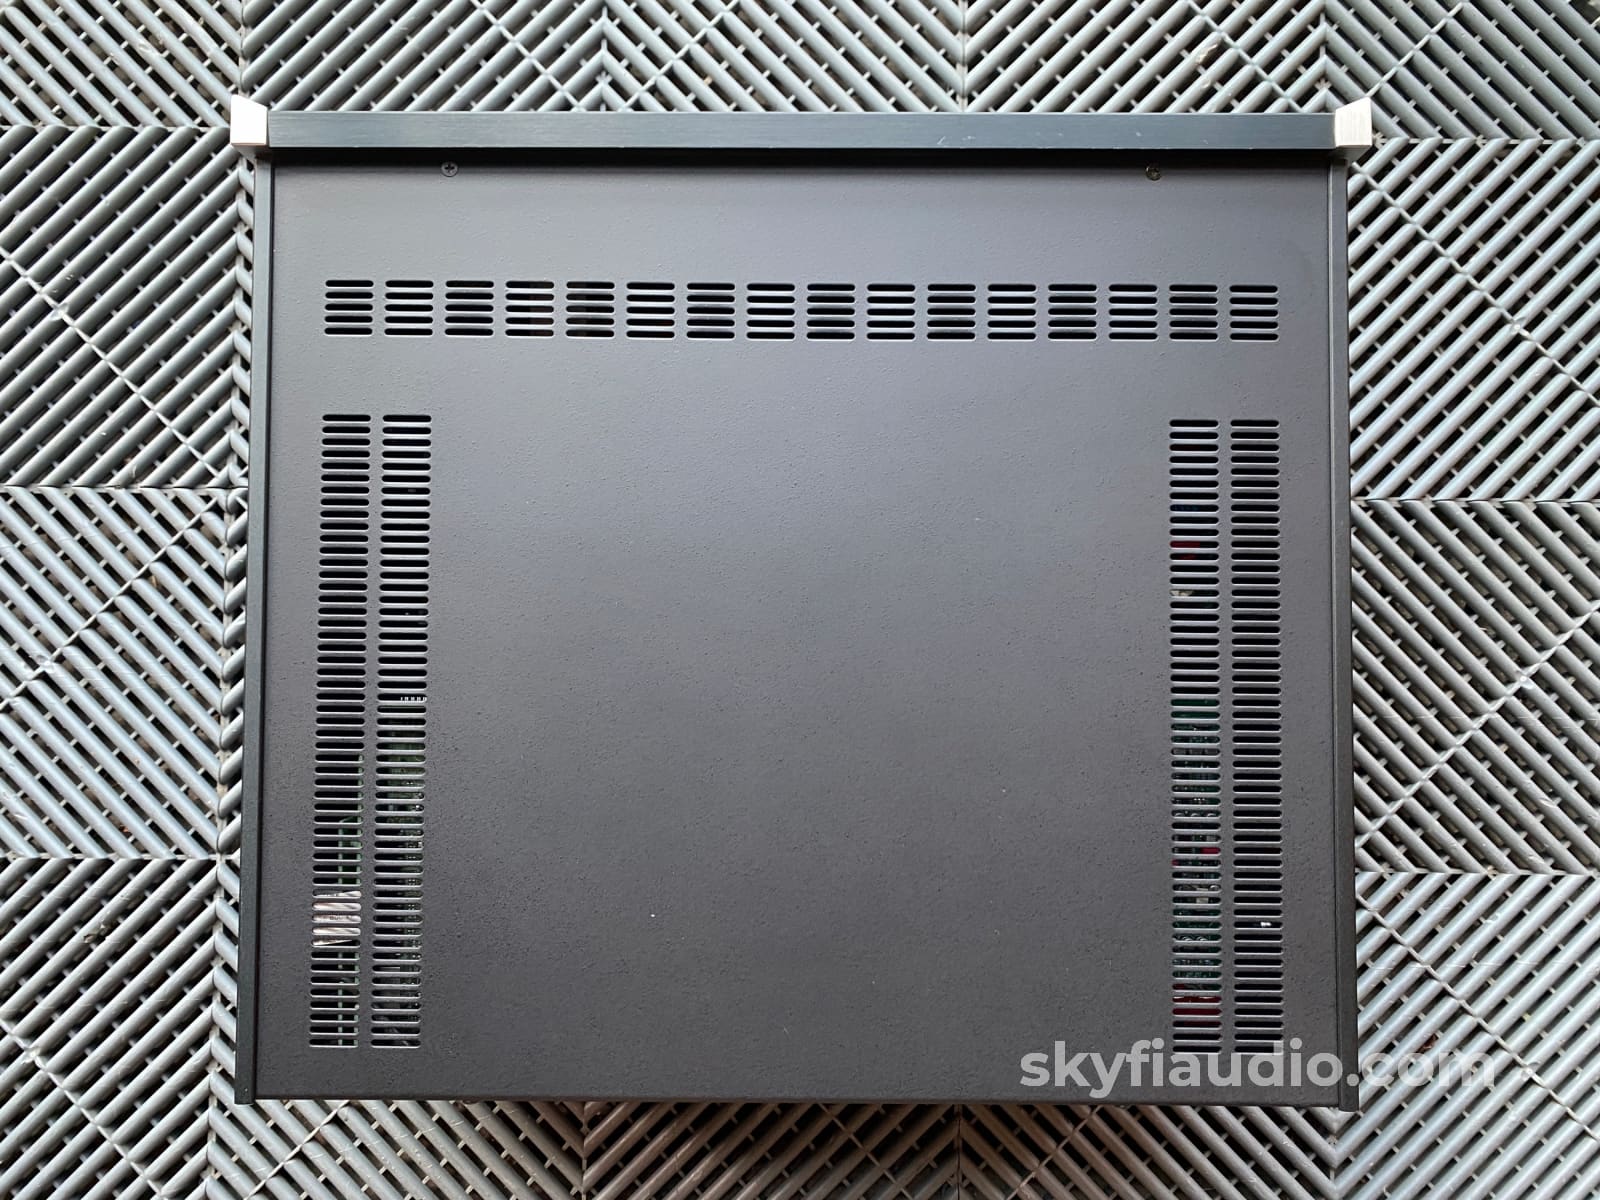 Mcintosh Mx121 Home Theater Pre/Processor W/Dolby True Hd Dts-Hd - Complete Kit Processor